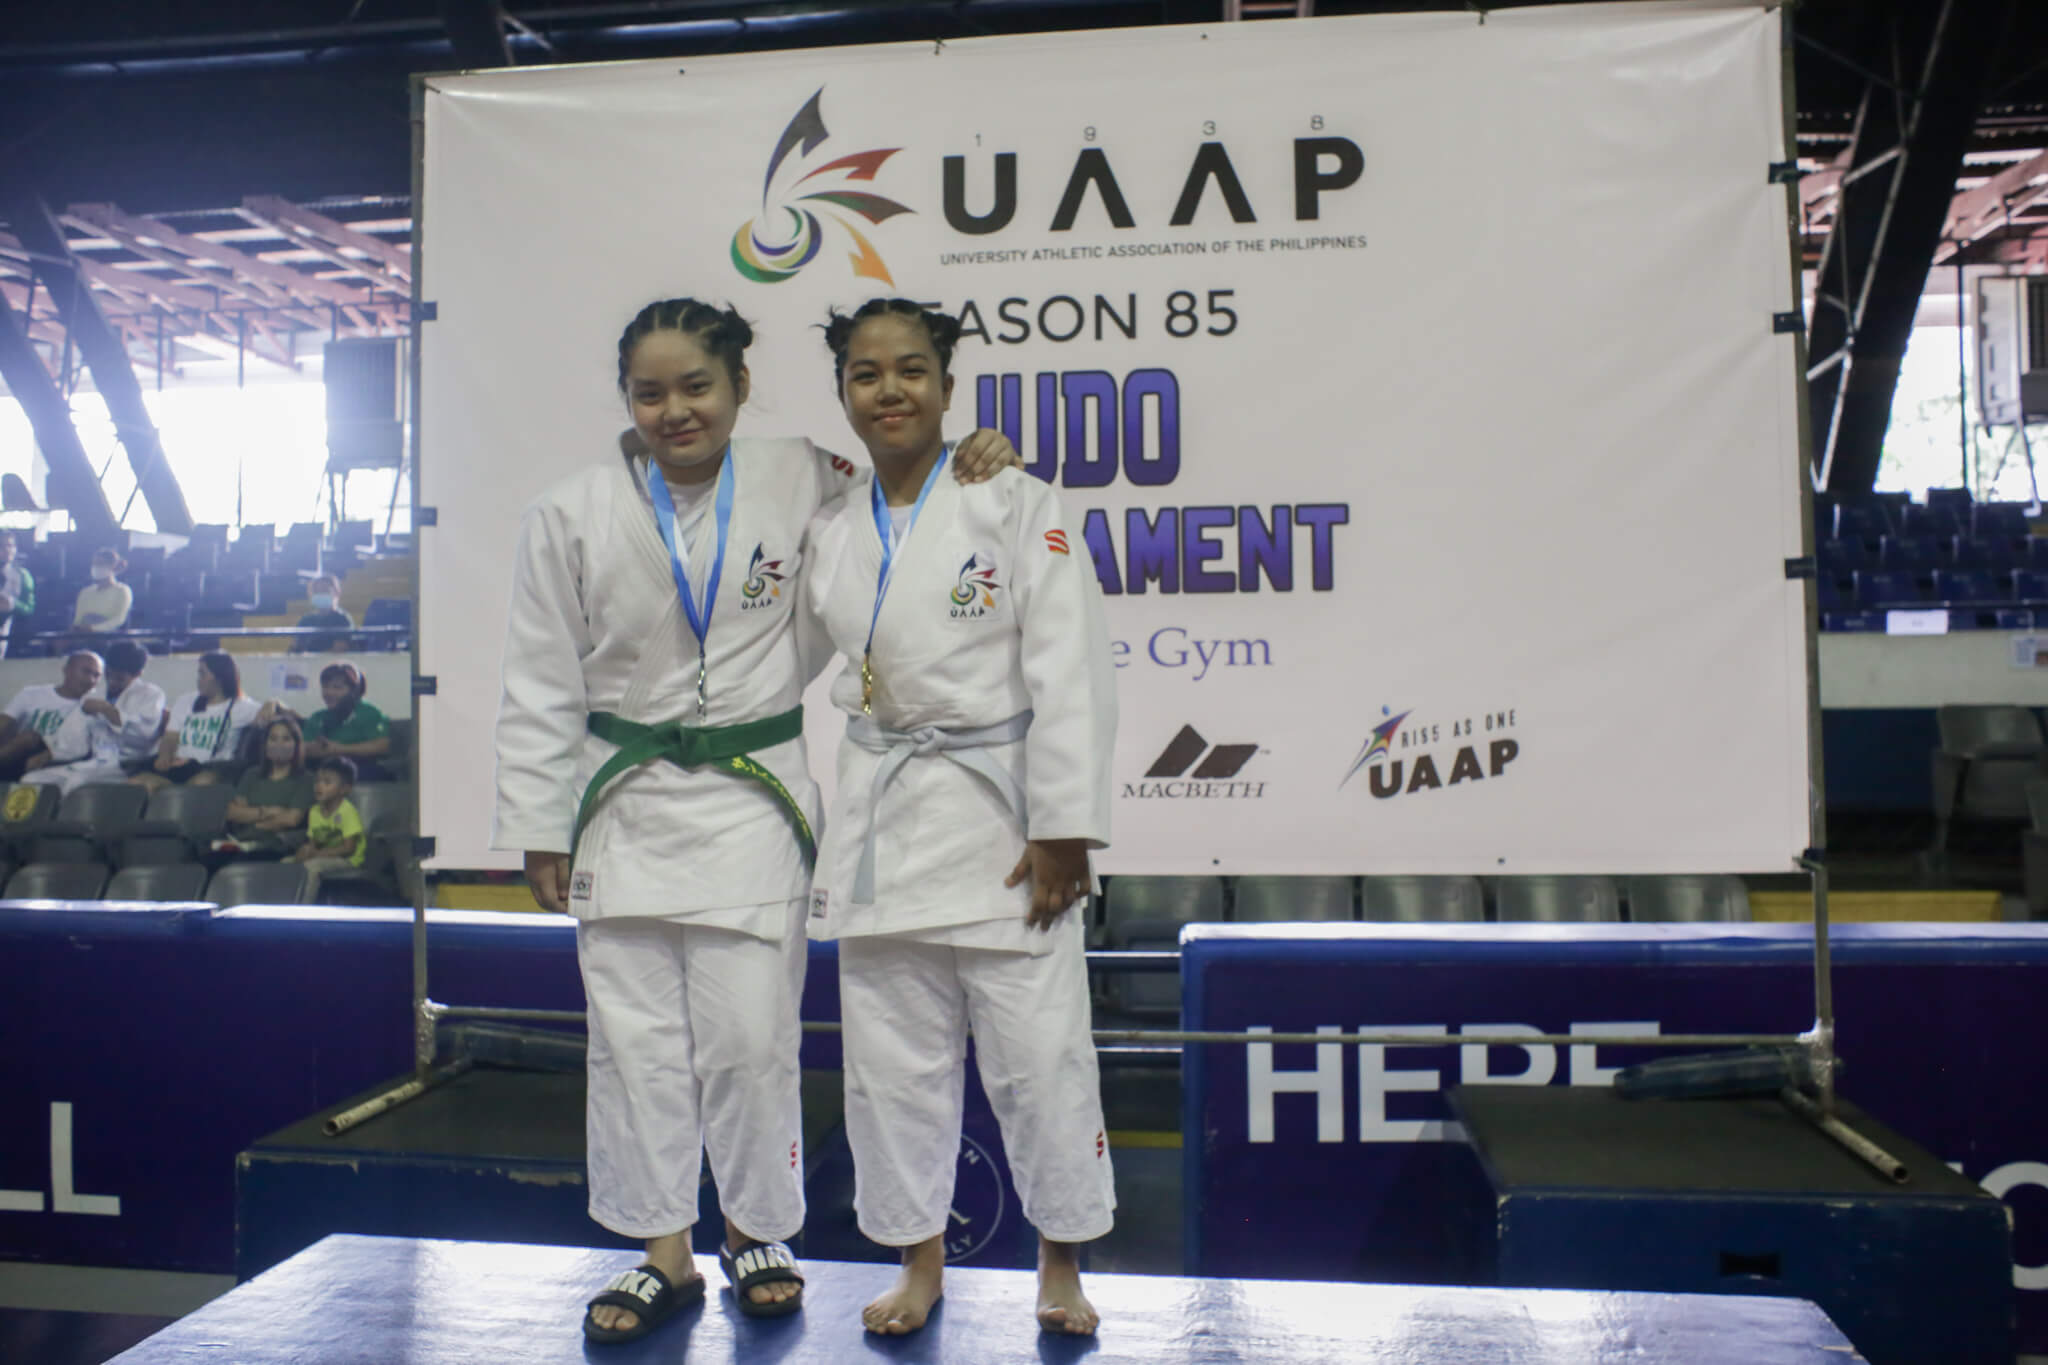 UAAP-85-Awarding-Girls-TunacaoUST-AmisolaUST UAAP 85 HSJD: UST boys, girls judokas dominate day 1 ADMU DLSU Judo News UAAP UE UP UST  - philippine sports news